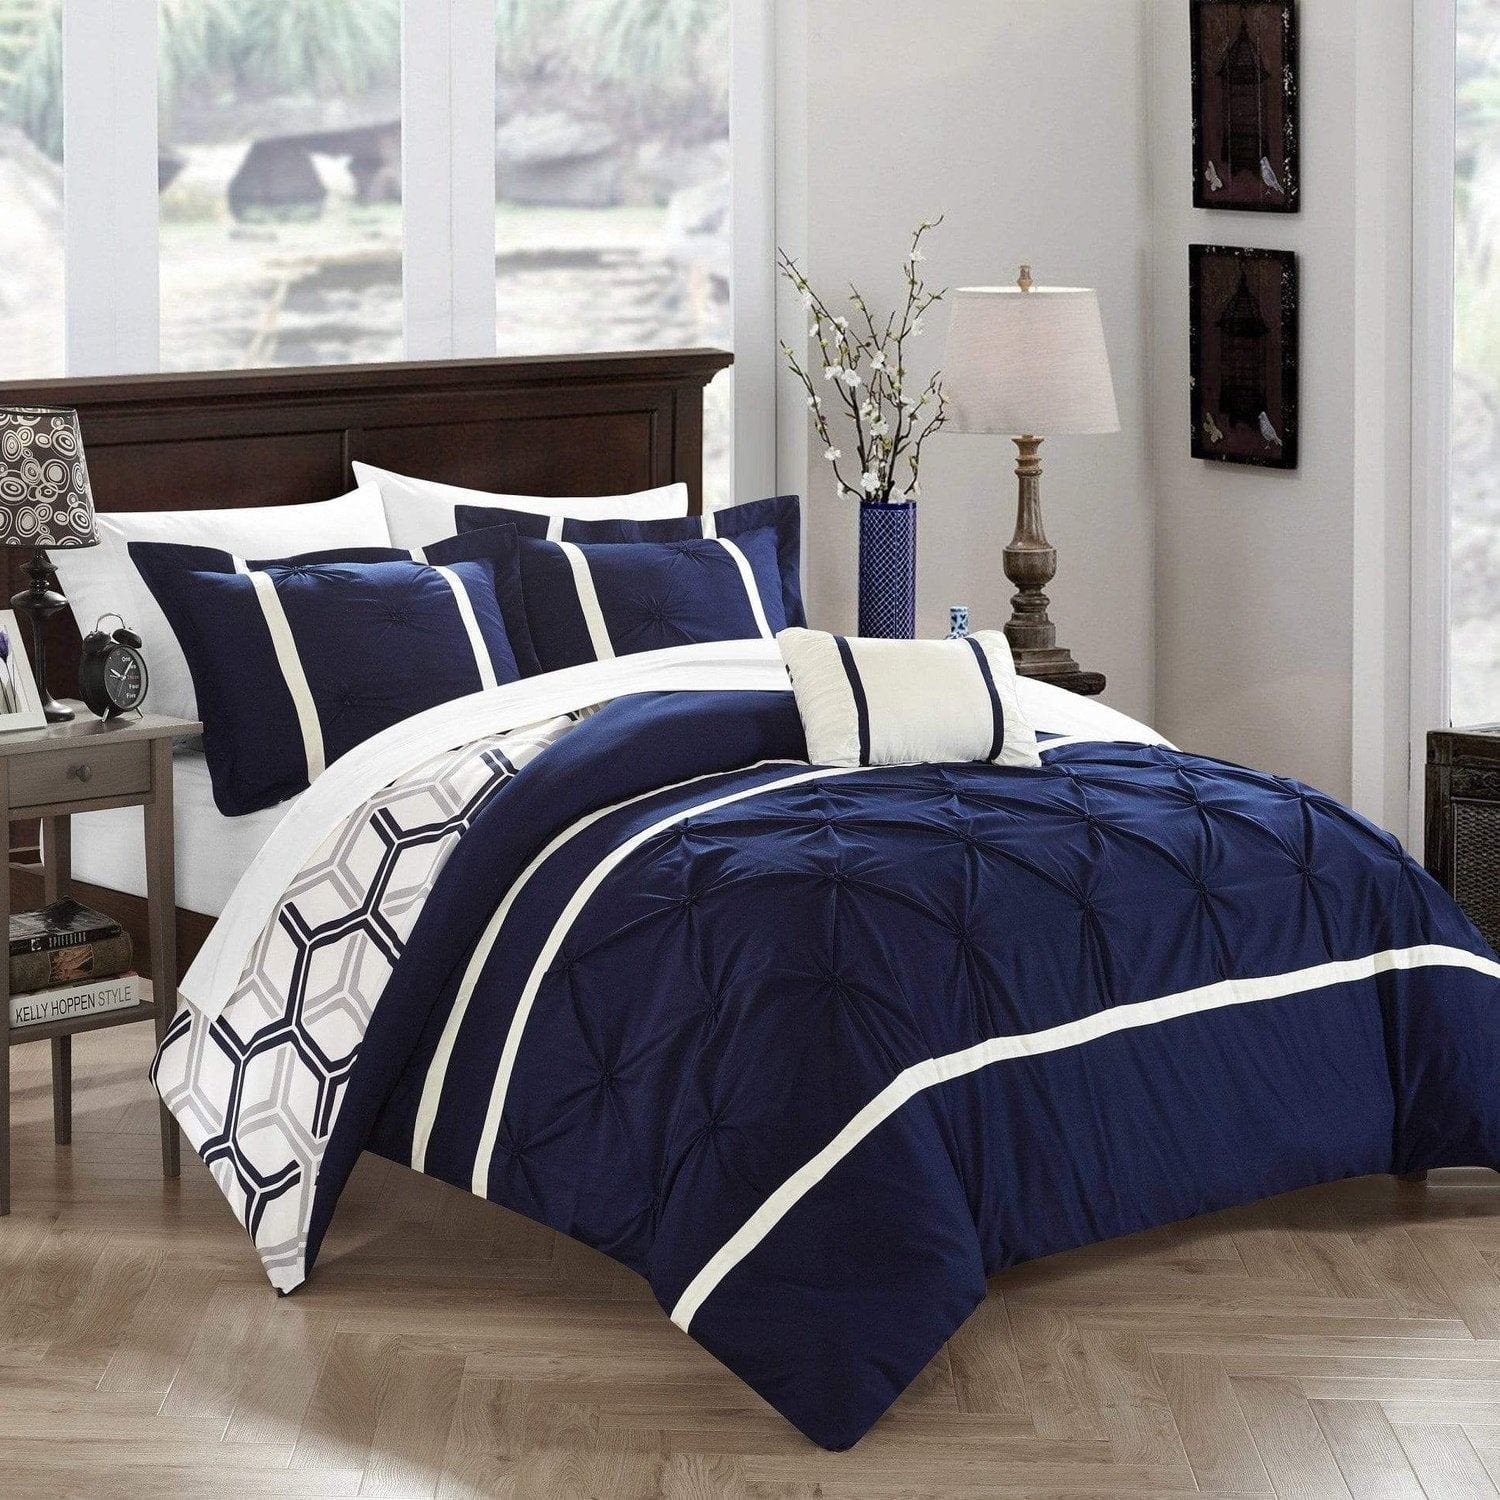 Chic Home Marcia Piece Pinch Pleat Reversible Comforter Set Bedding